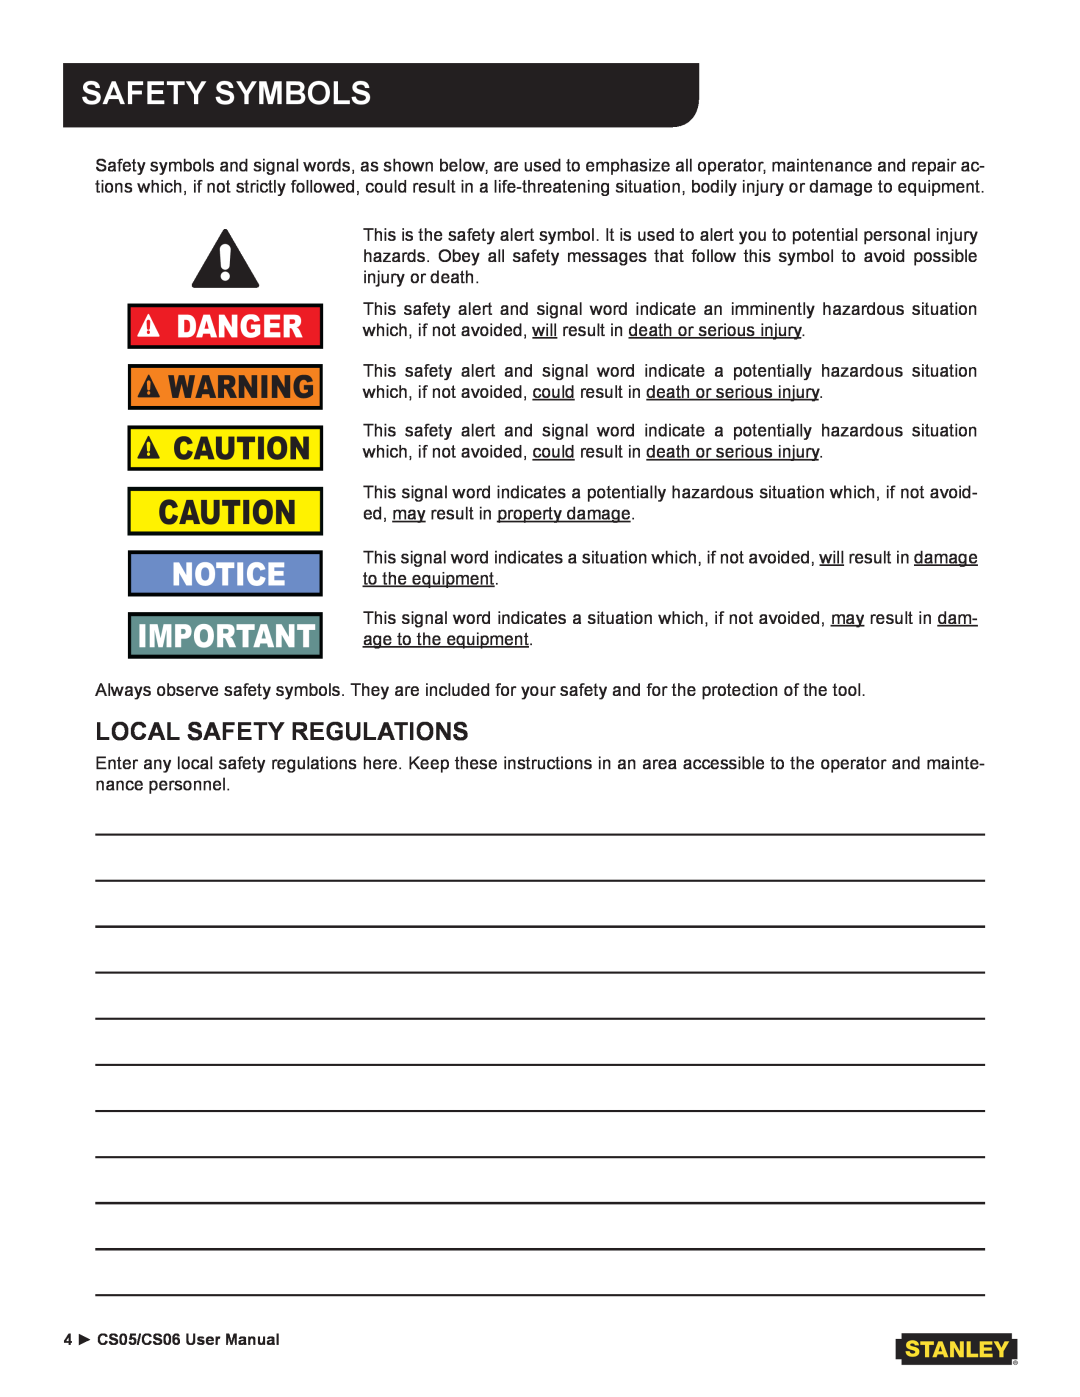 Stanley Black & Decker CS05/CS06 user manual Safety Symbols, Danger, Local Safety Regulations 